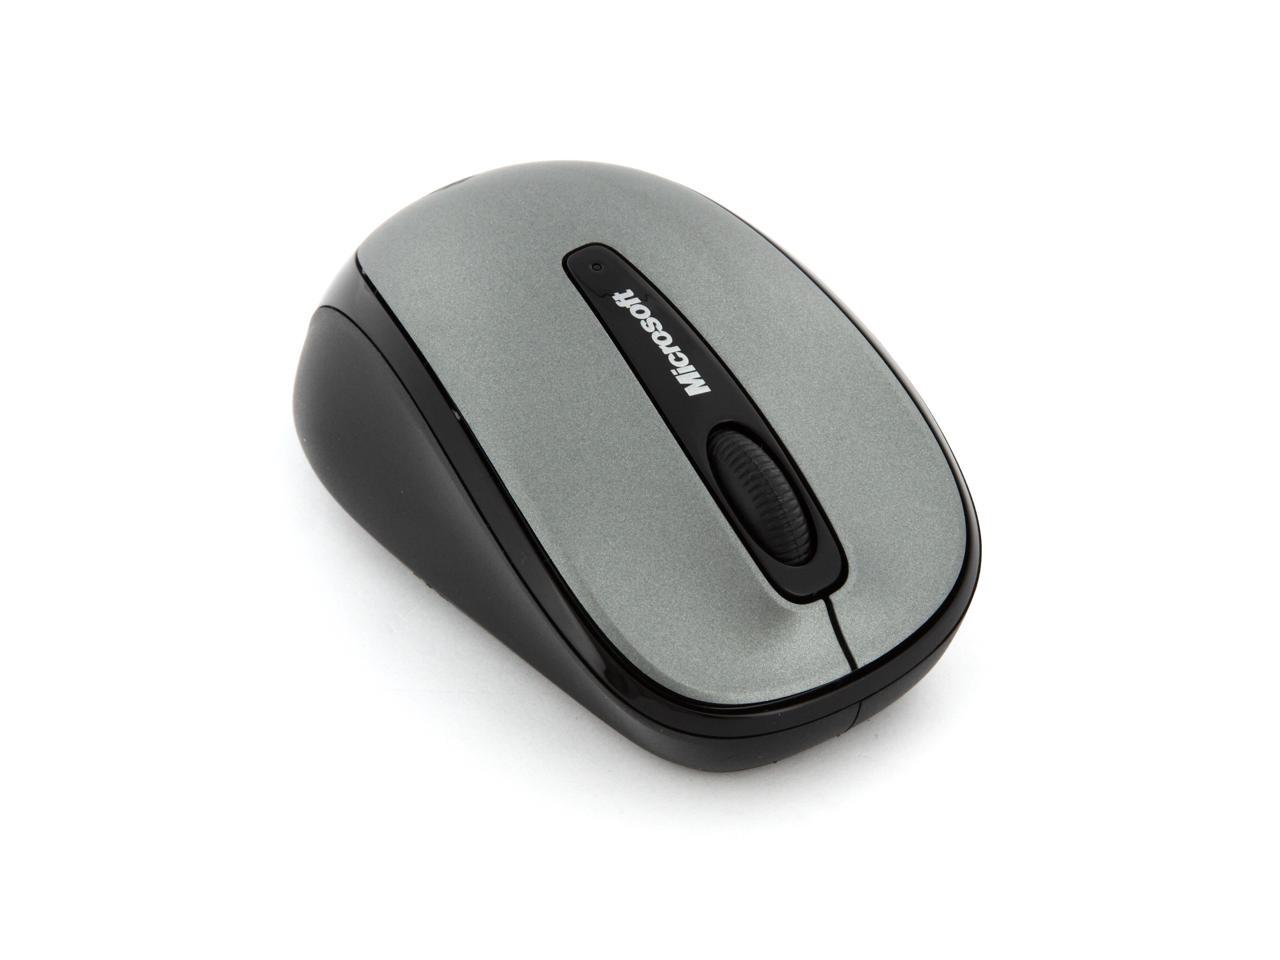 microsoft wireless mouse 3500 software